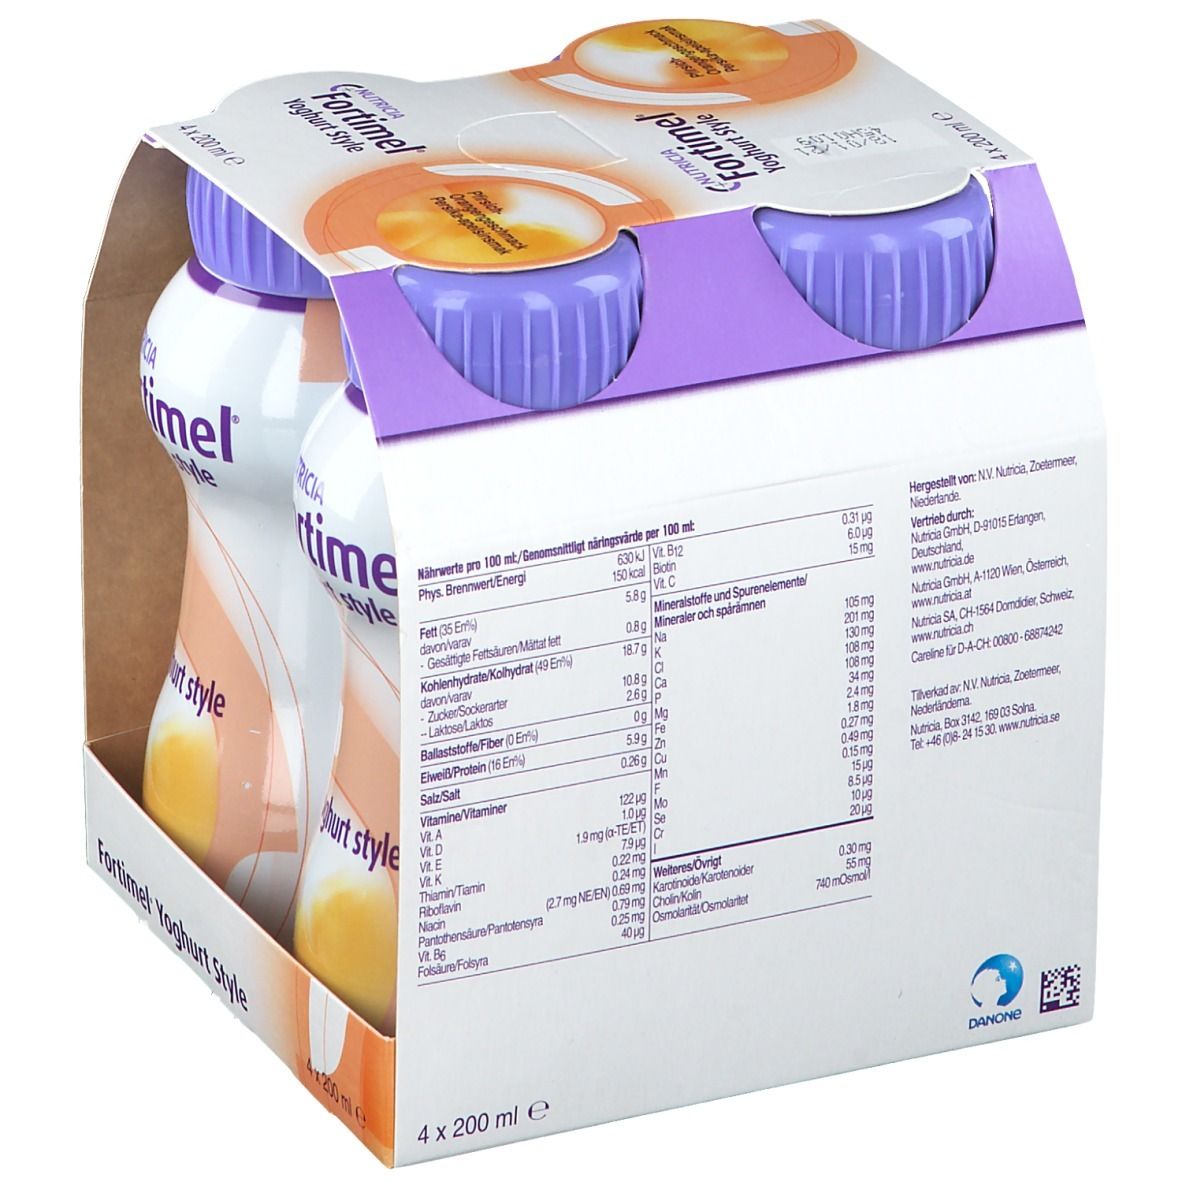 Fortimel® Yoghurt Style Trinknahrung Pfirsich-Orange